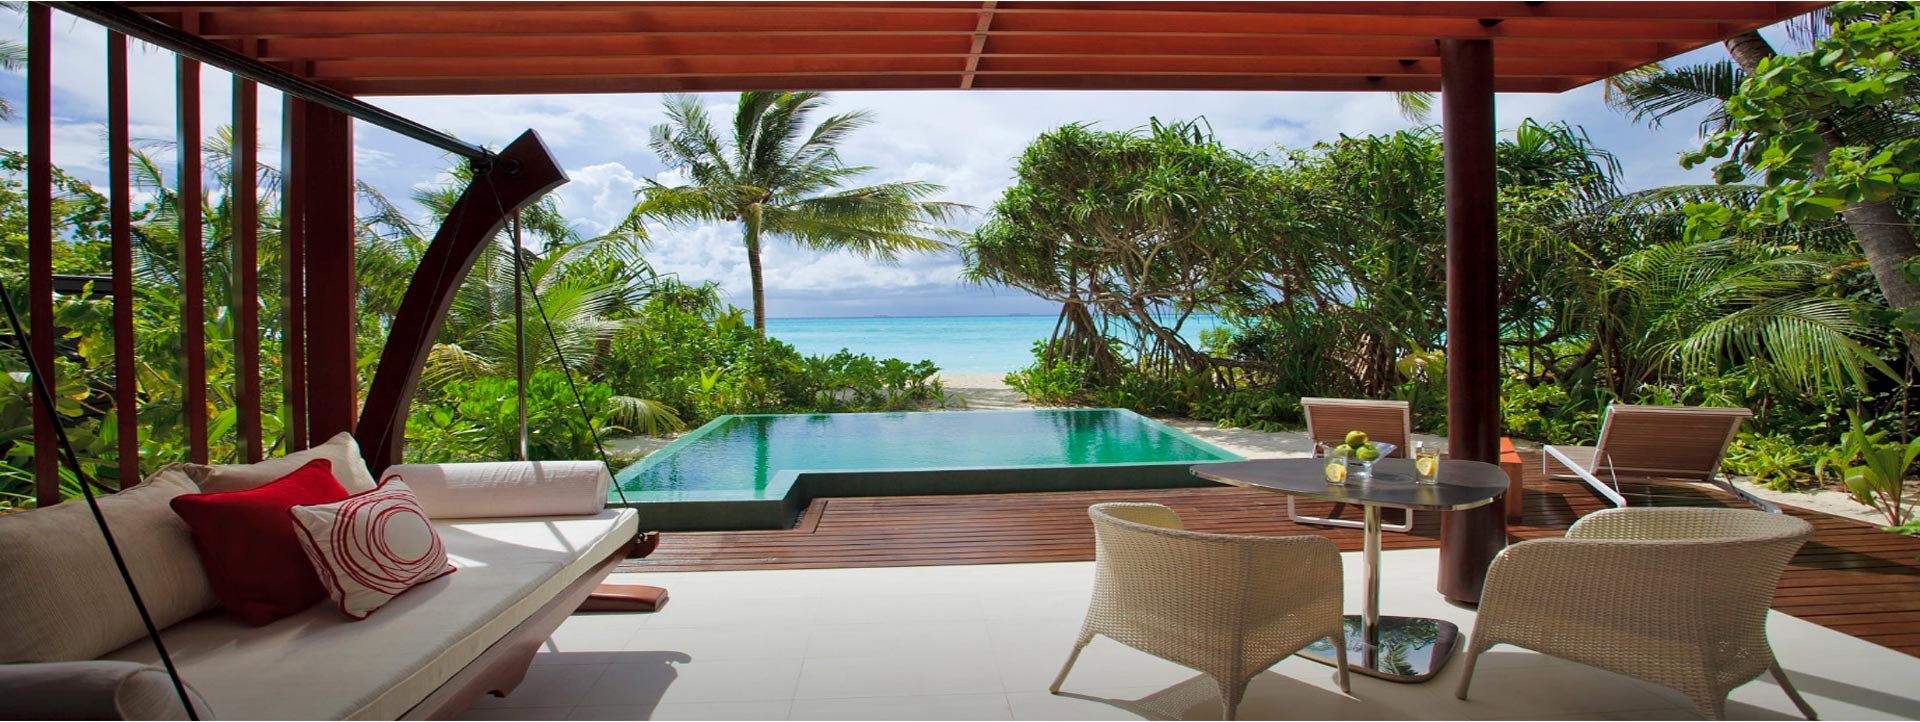 NIYAMA-ISLAND-beach-villa-private-pool